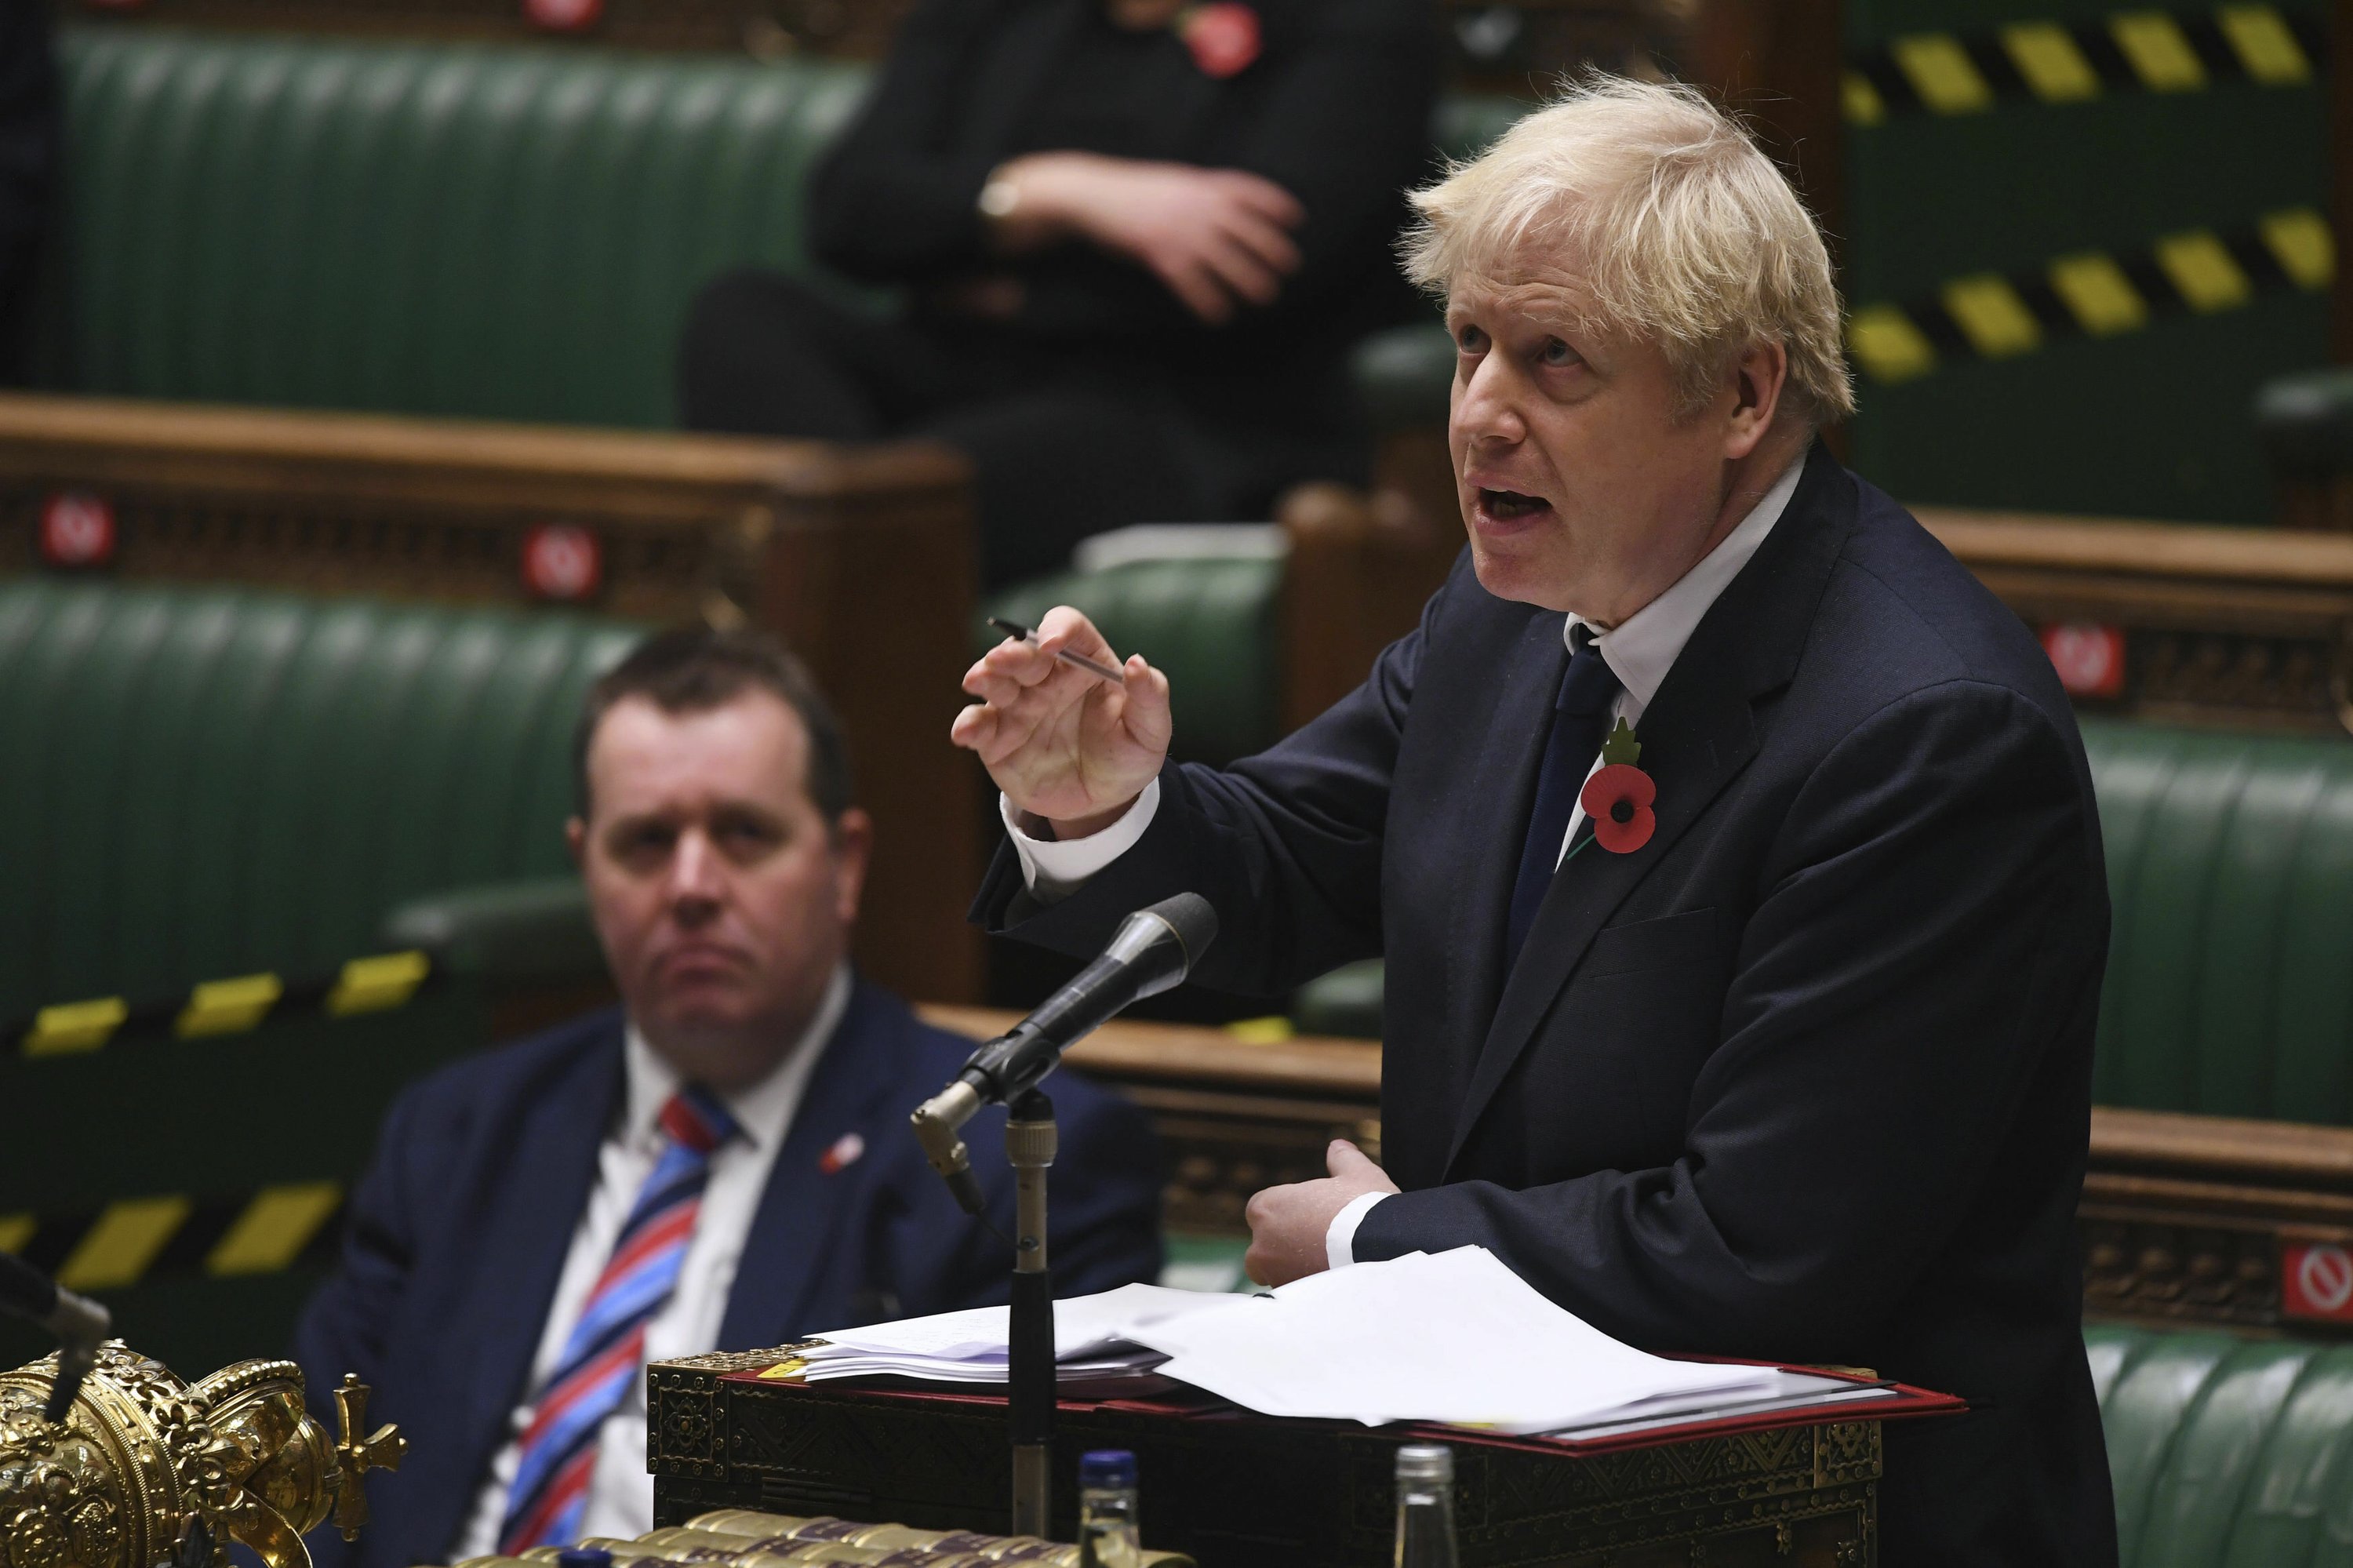 Britain's Johnson in self-isolation; has no virus symptoms